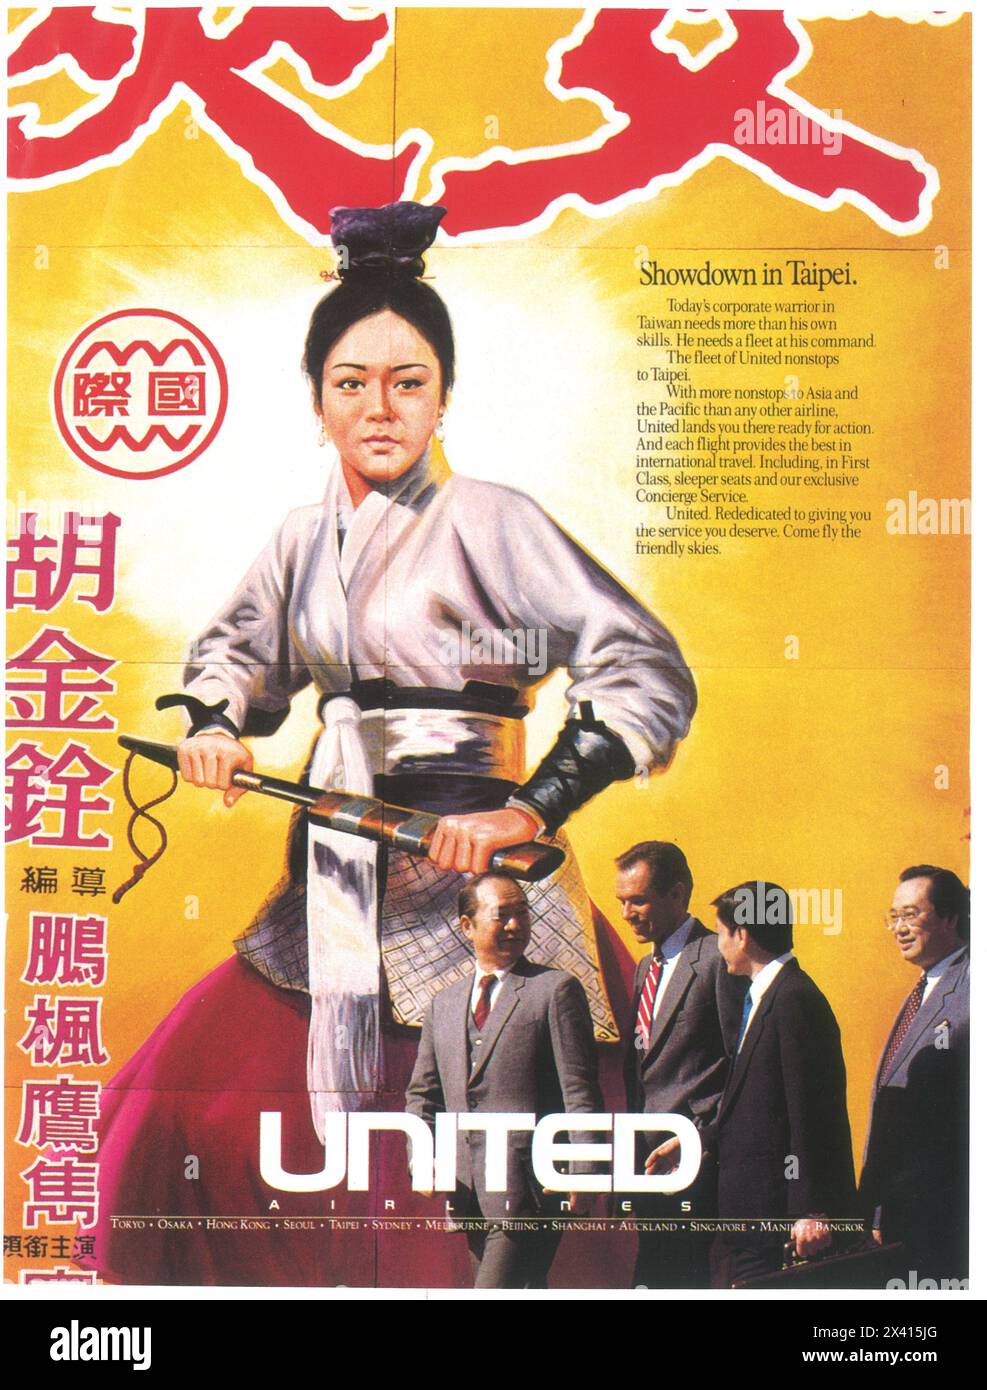 1989 United Airlines ad - Showdown in Taipei Stock Photo